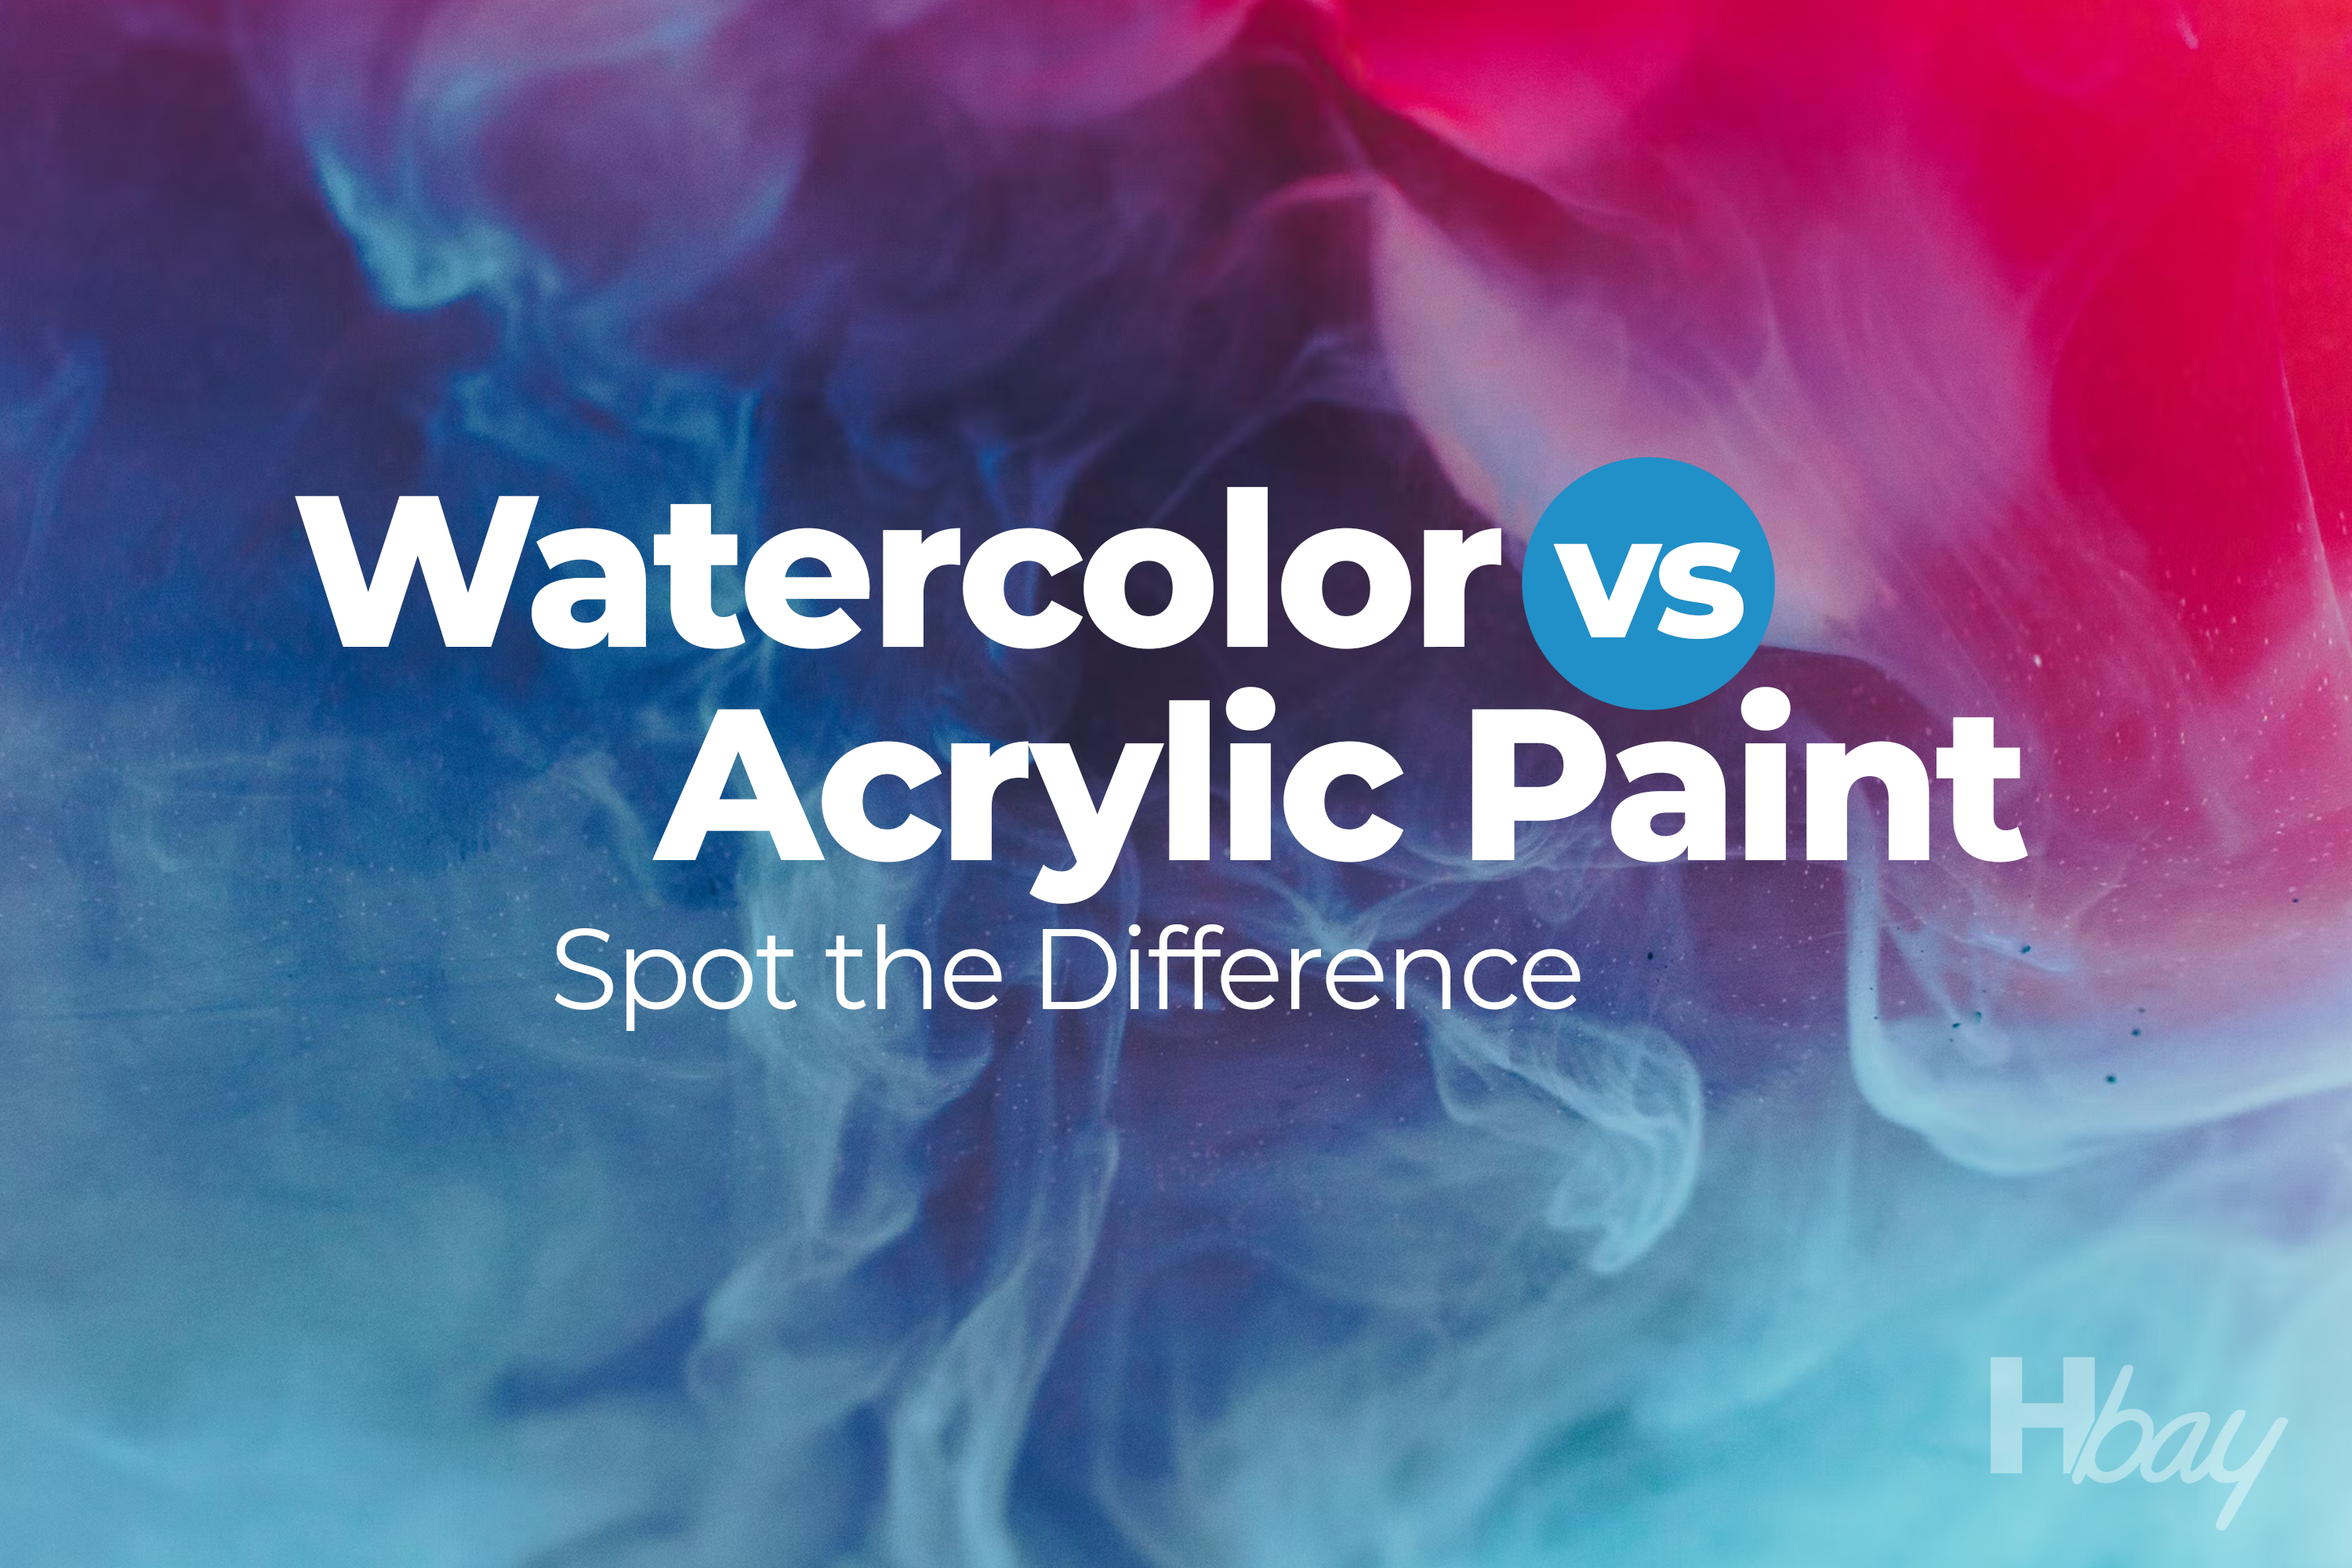 Watercolor vs Acrylic Paint